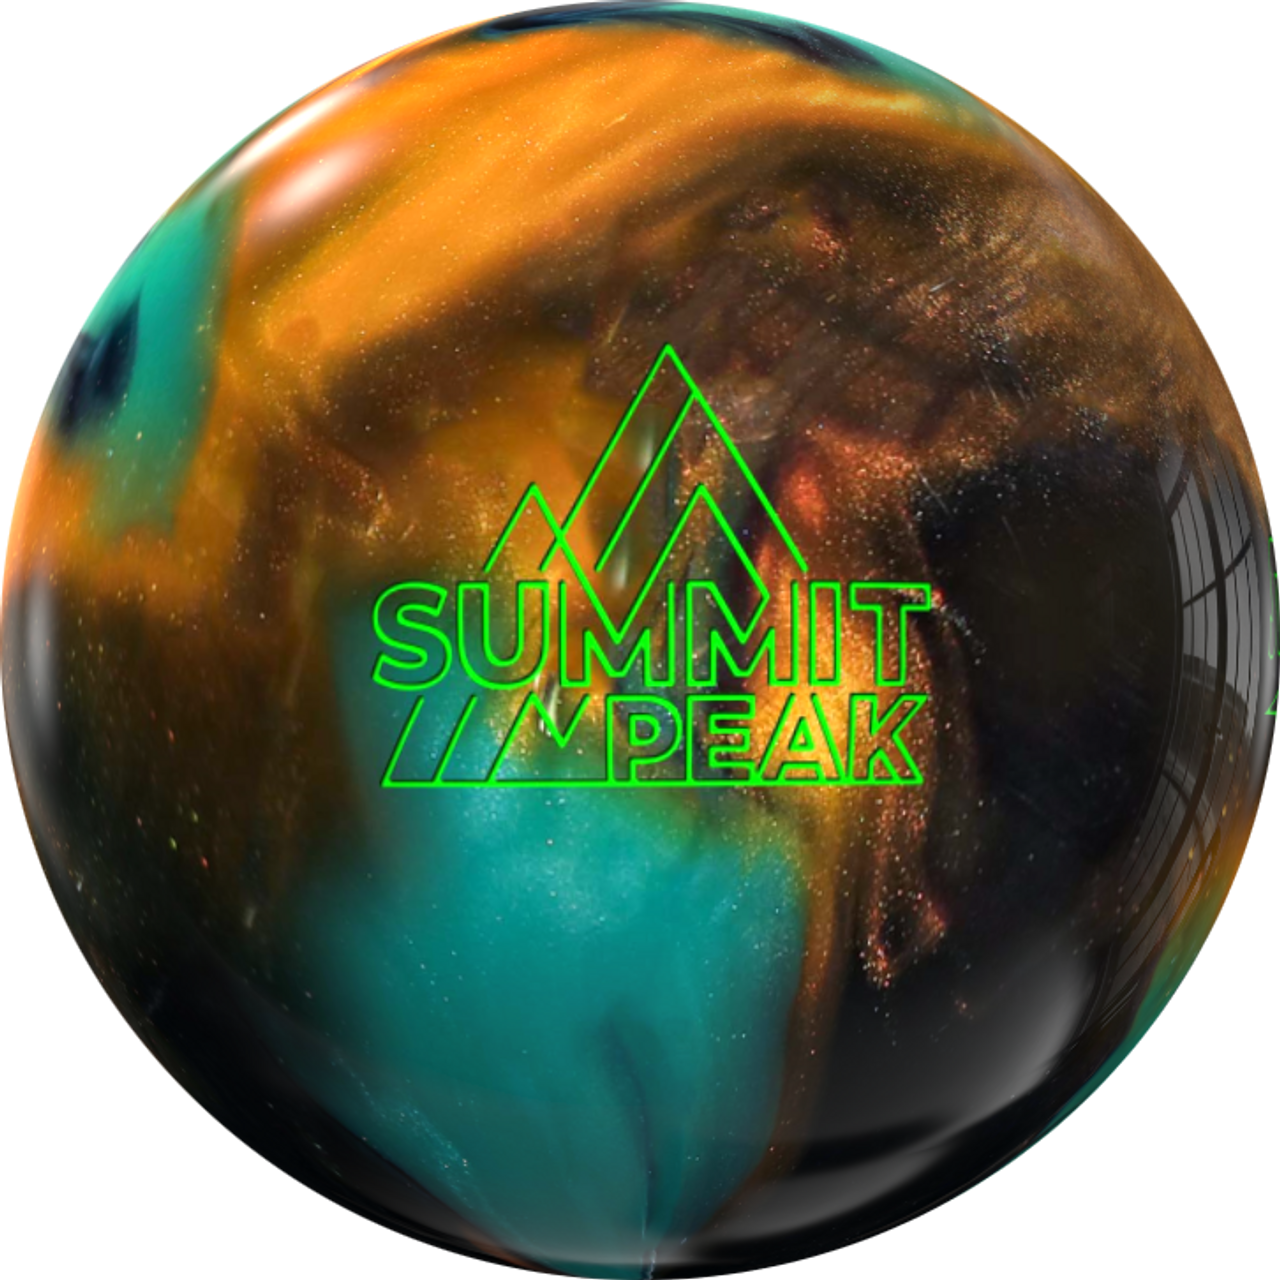 Storm Summit Peak Bowling Ball